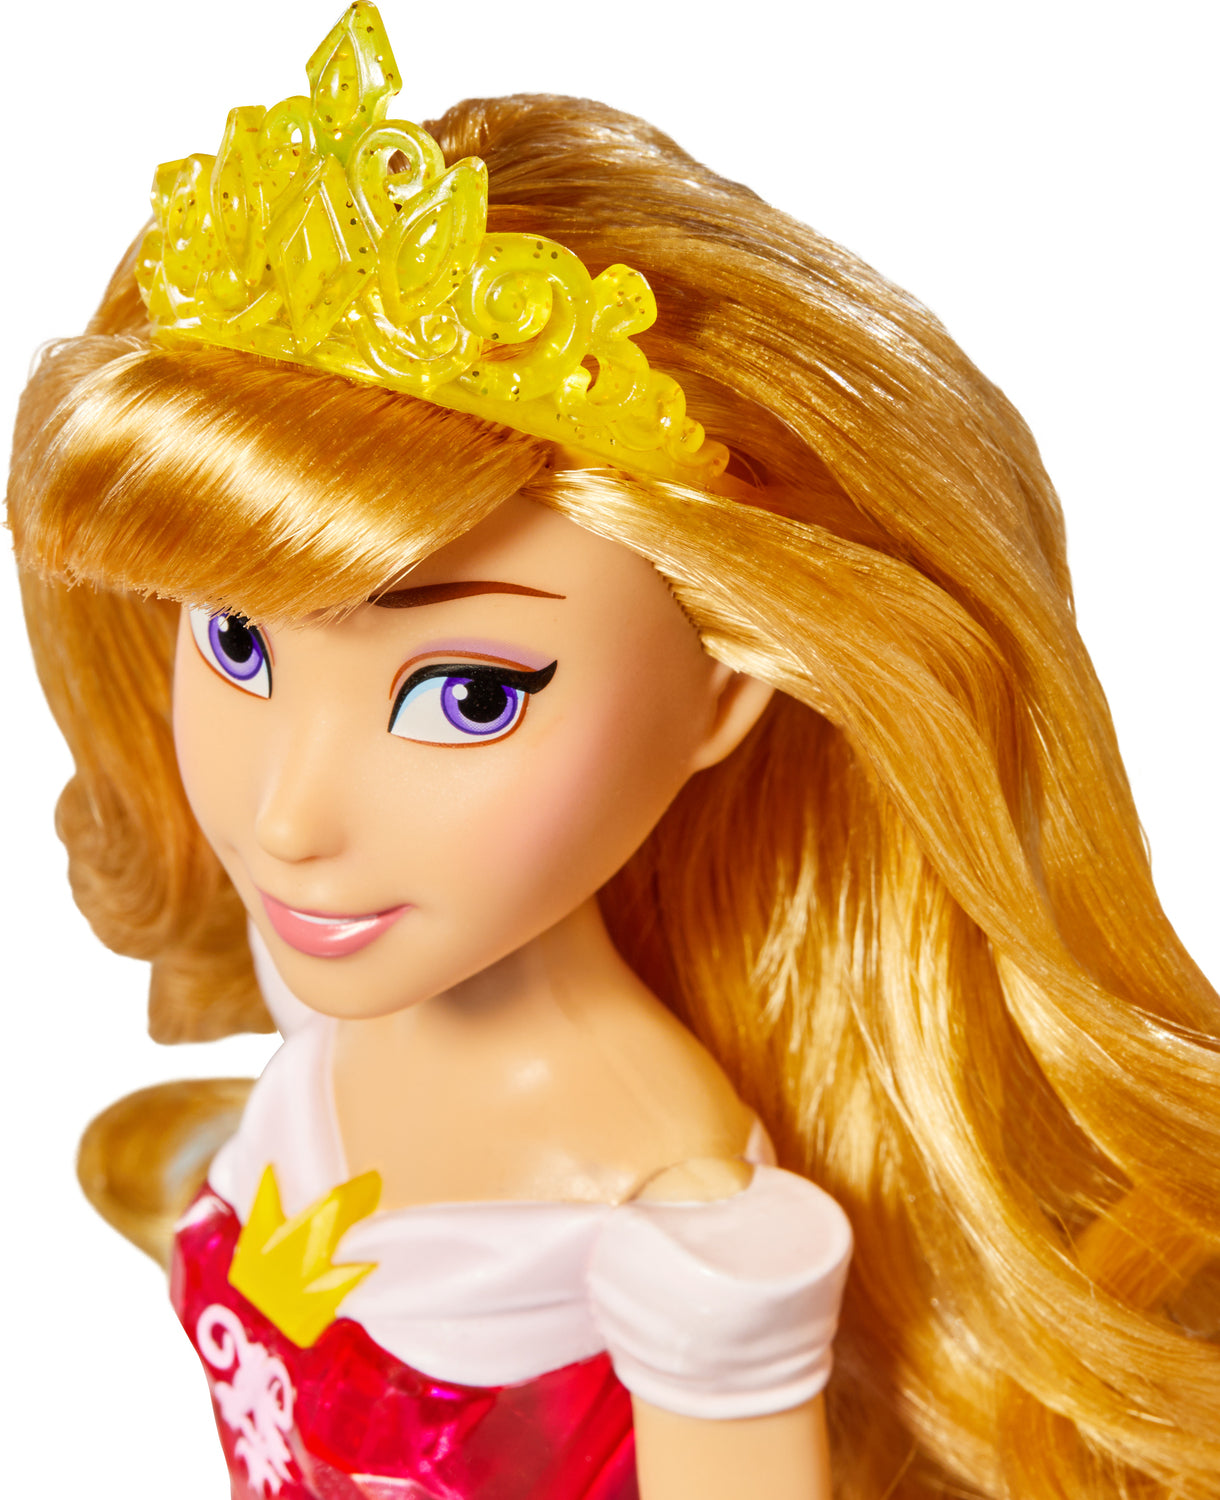 Disney Princess doll - F08995X6